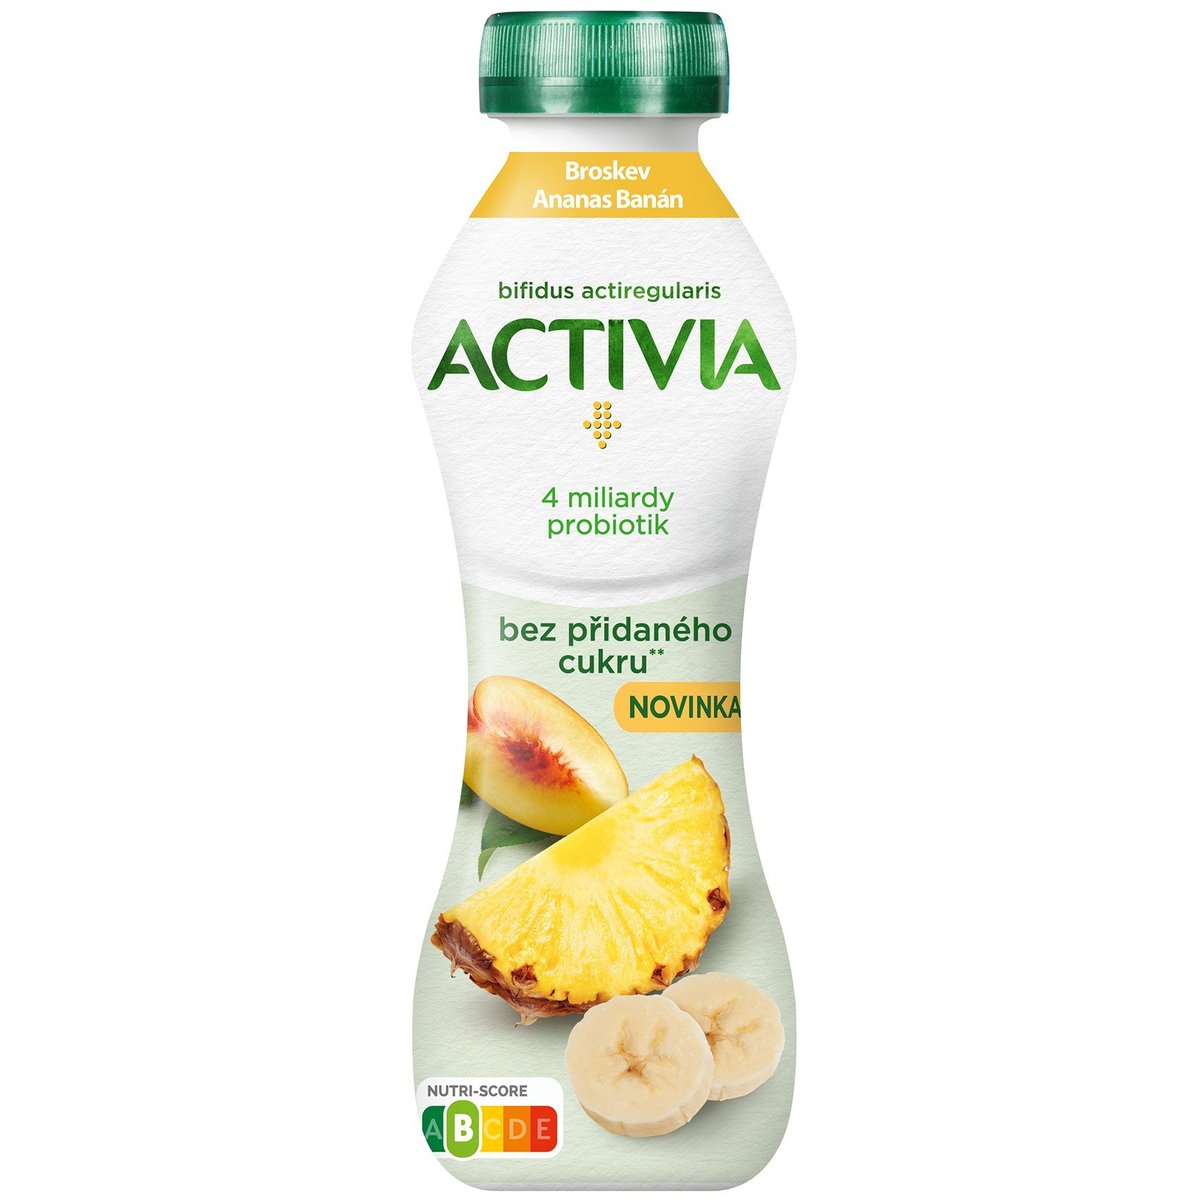 Activia Probiotický jogurtový nápoj broskev, ananas a banán bez přidaného cukru